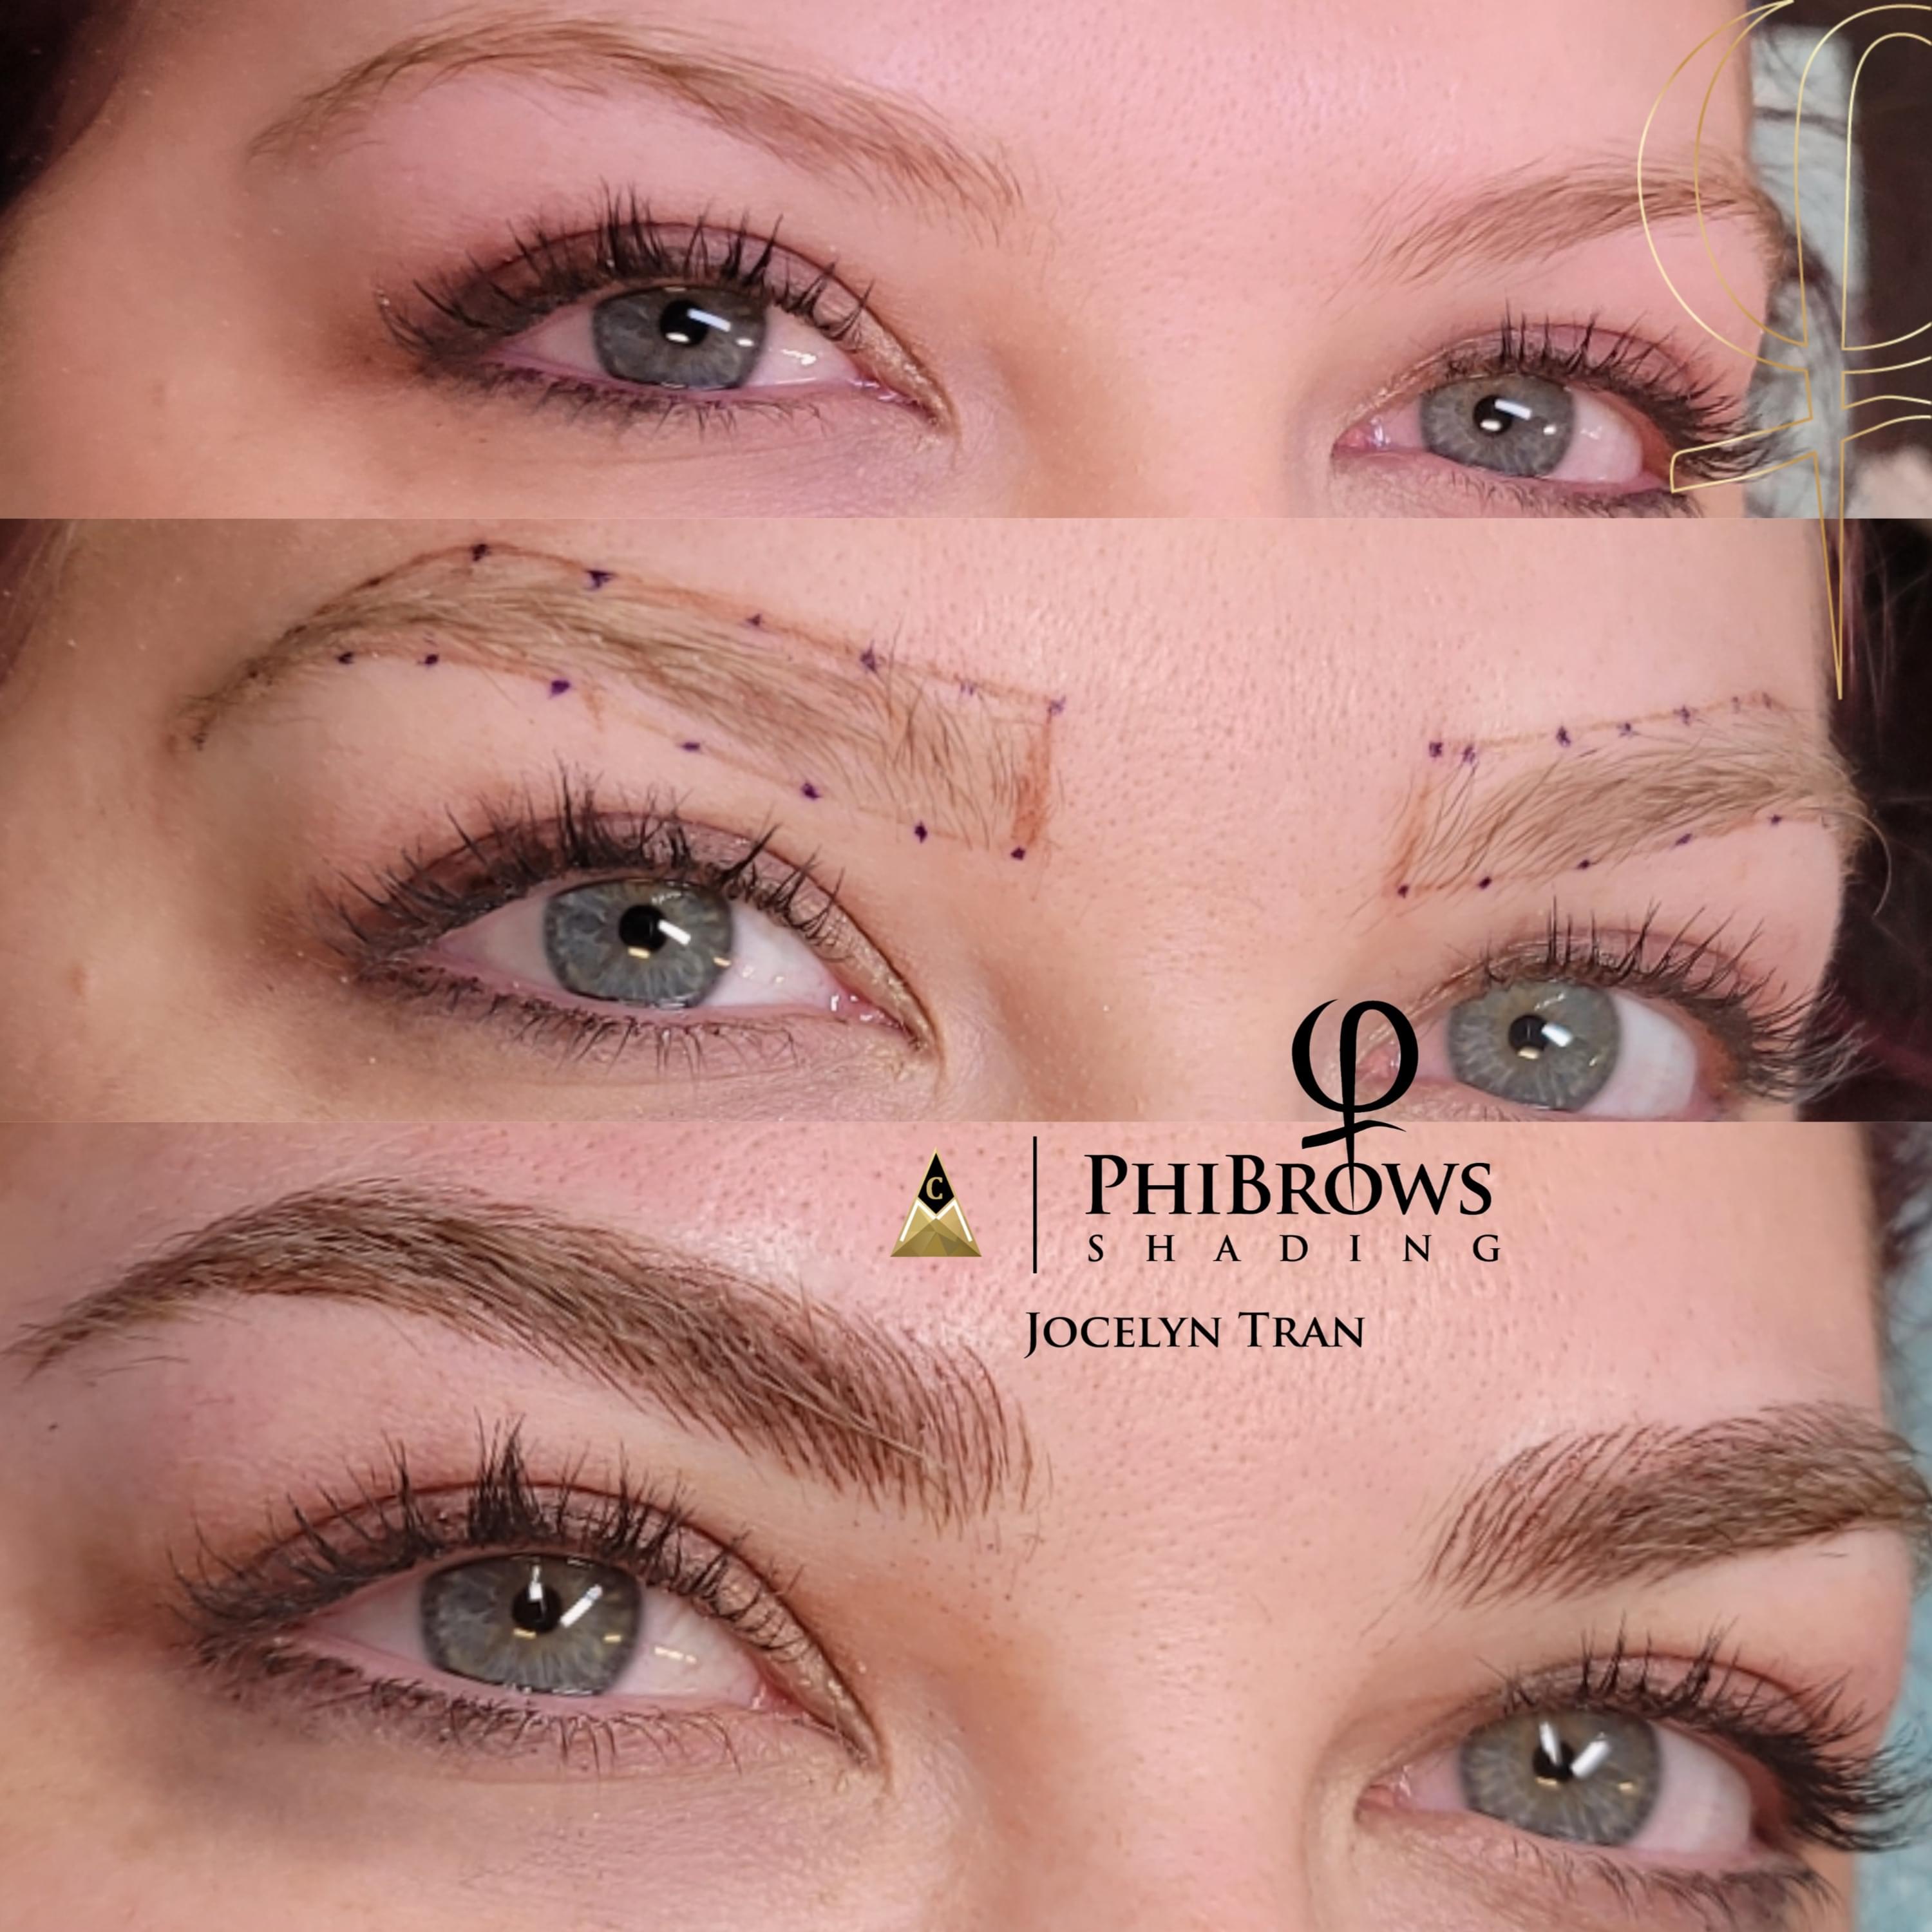 phibrows, phiacademy, microblading, microblading eyebrows, microblading eyebrows before and after, microblading before and after, phibrows before and after